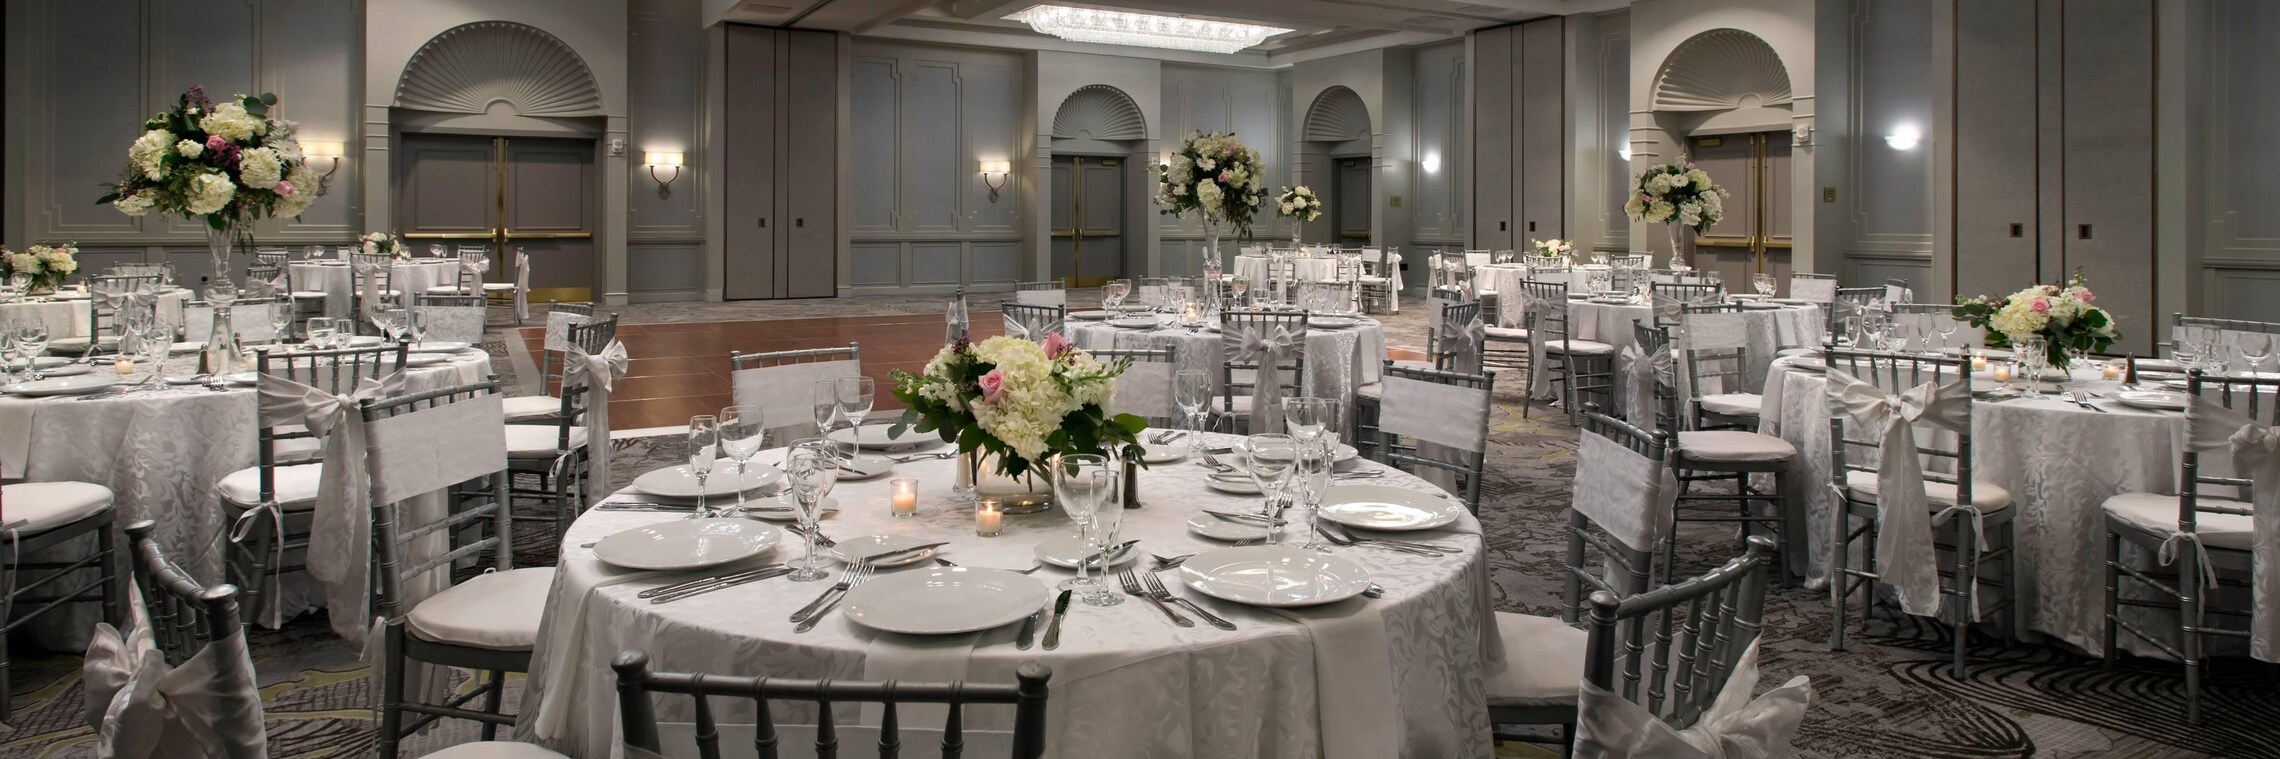 Grand Ballroom - Wedding Reception